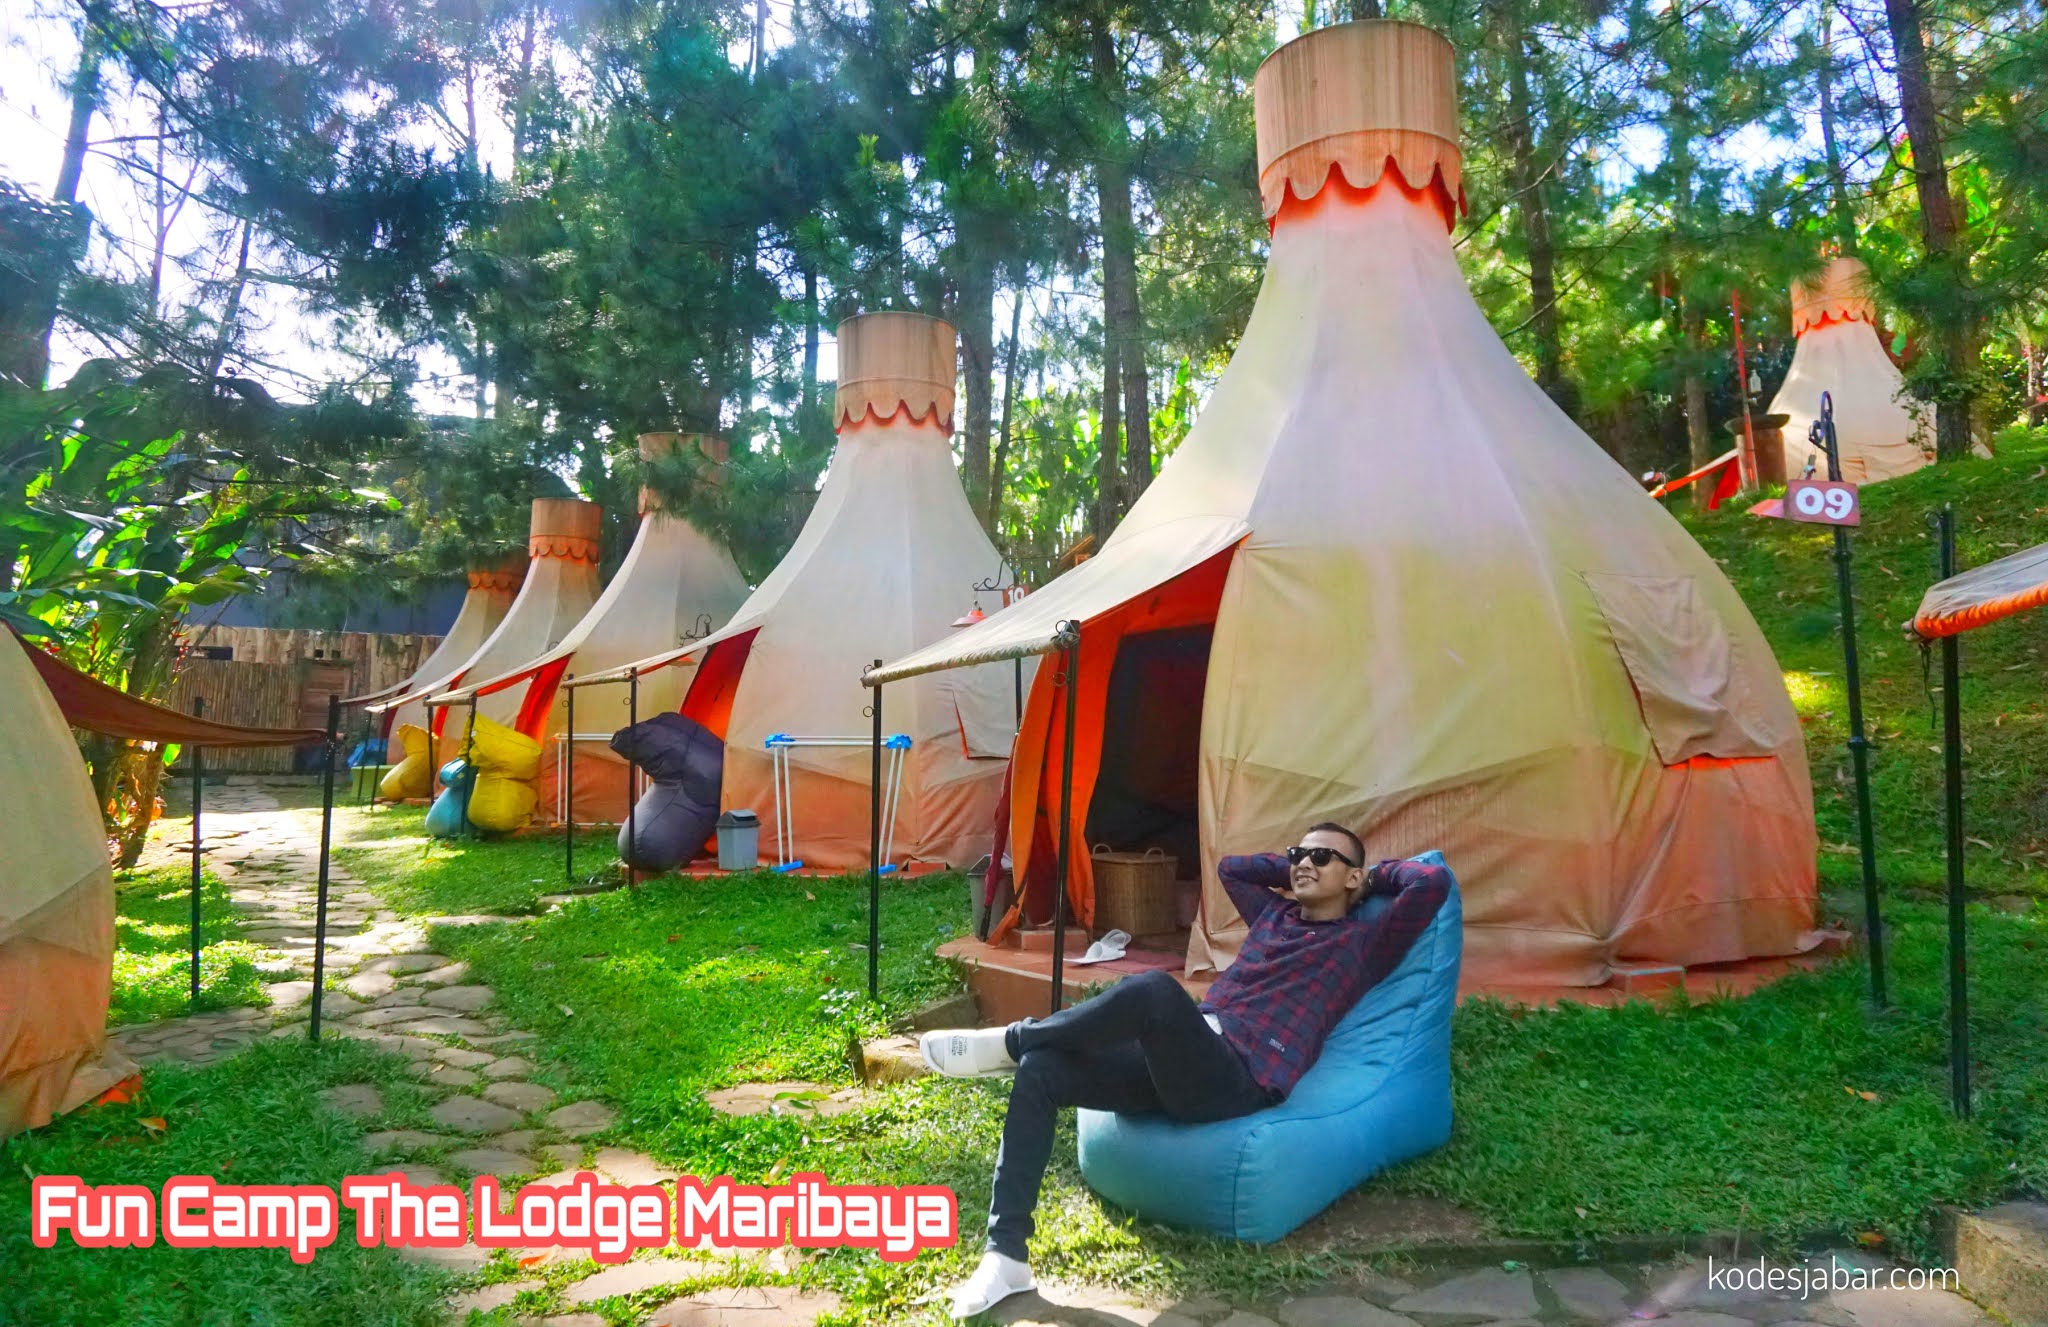 Fun Camp The Lodge Maribaya